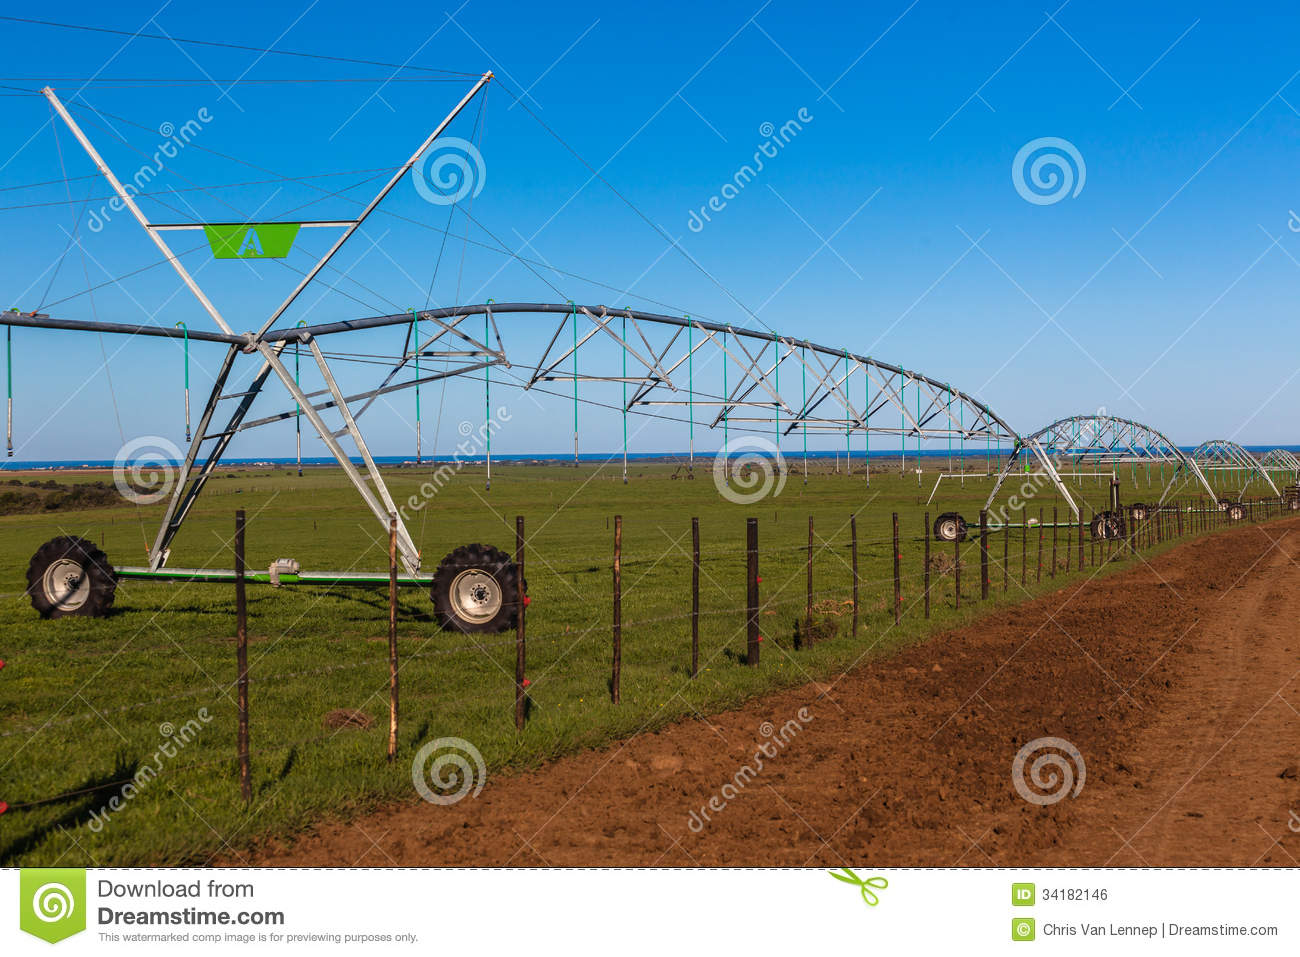 Farm Mobile Water Irrigation Sprinklers Royalty Free Stock Image    